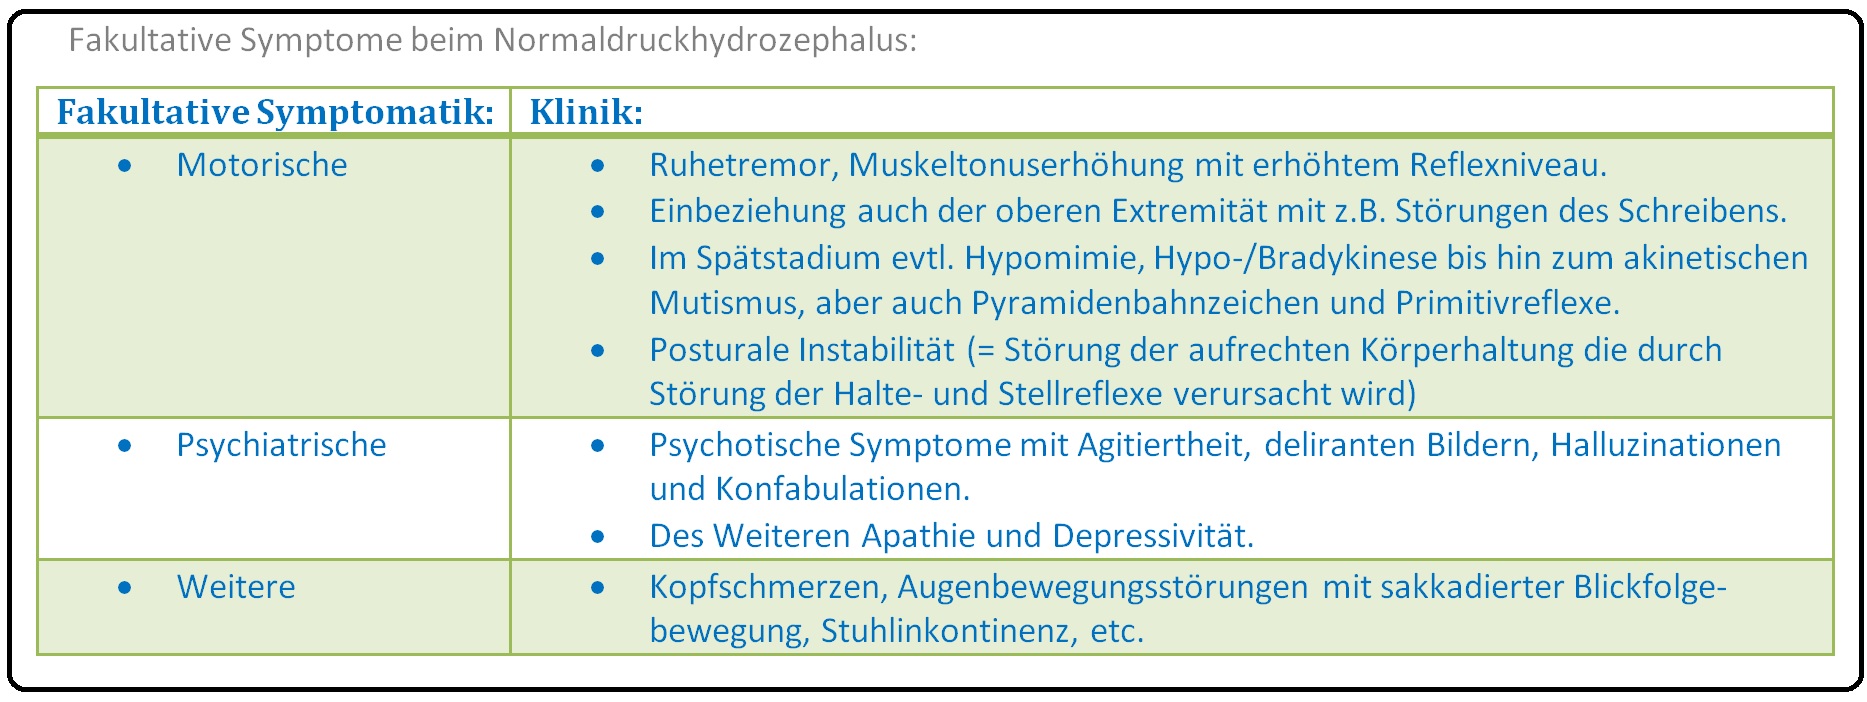 011 Fakultative Symptome beim Normaldruckhydrozephalus